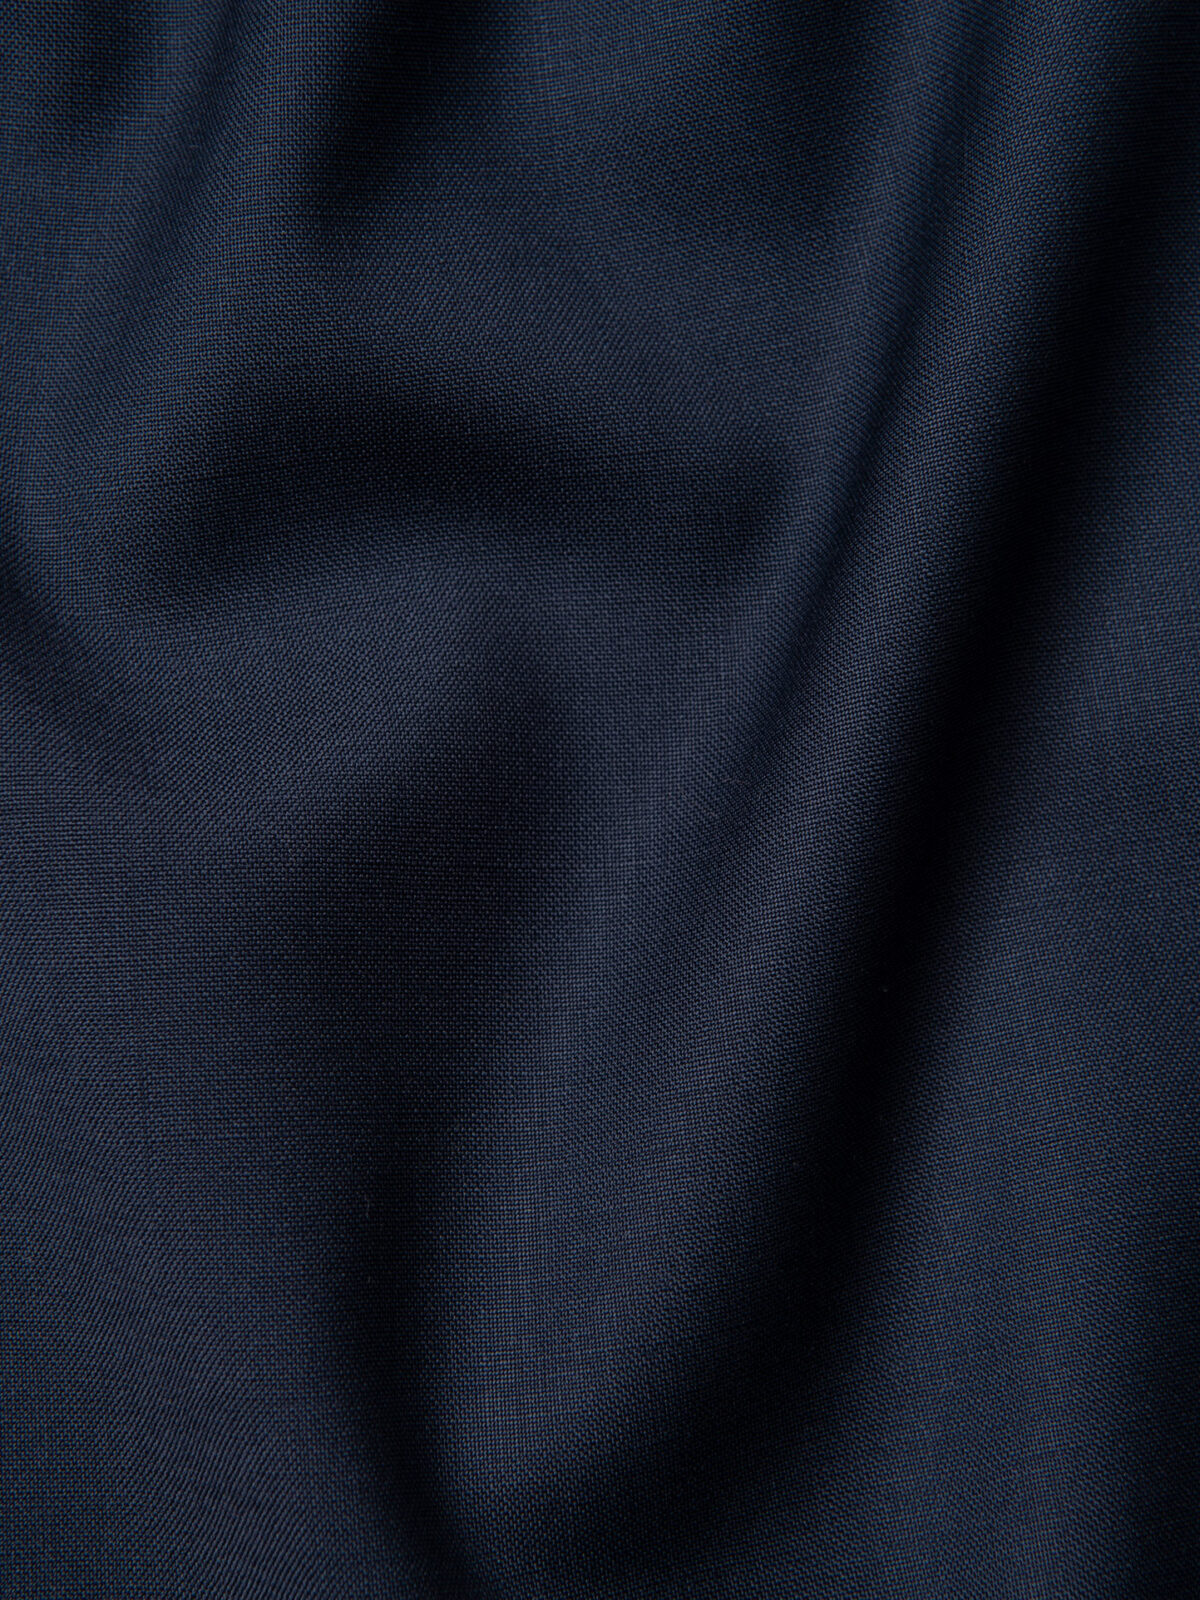 Reda Navy Blue Merino Wool Shirts by Proper Cloth